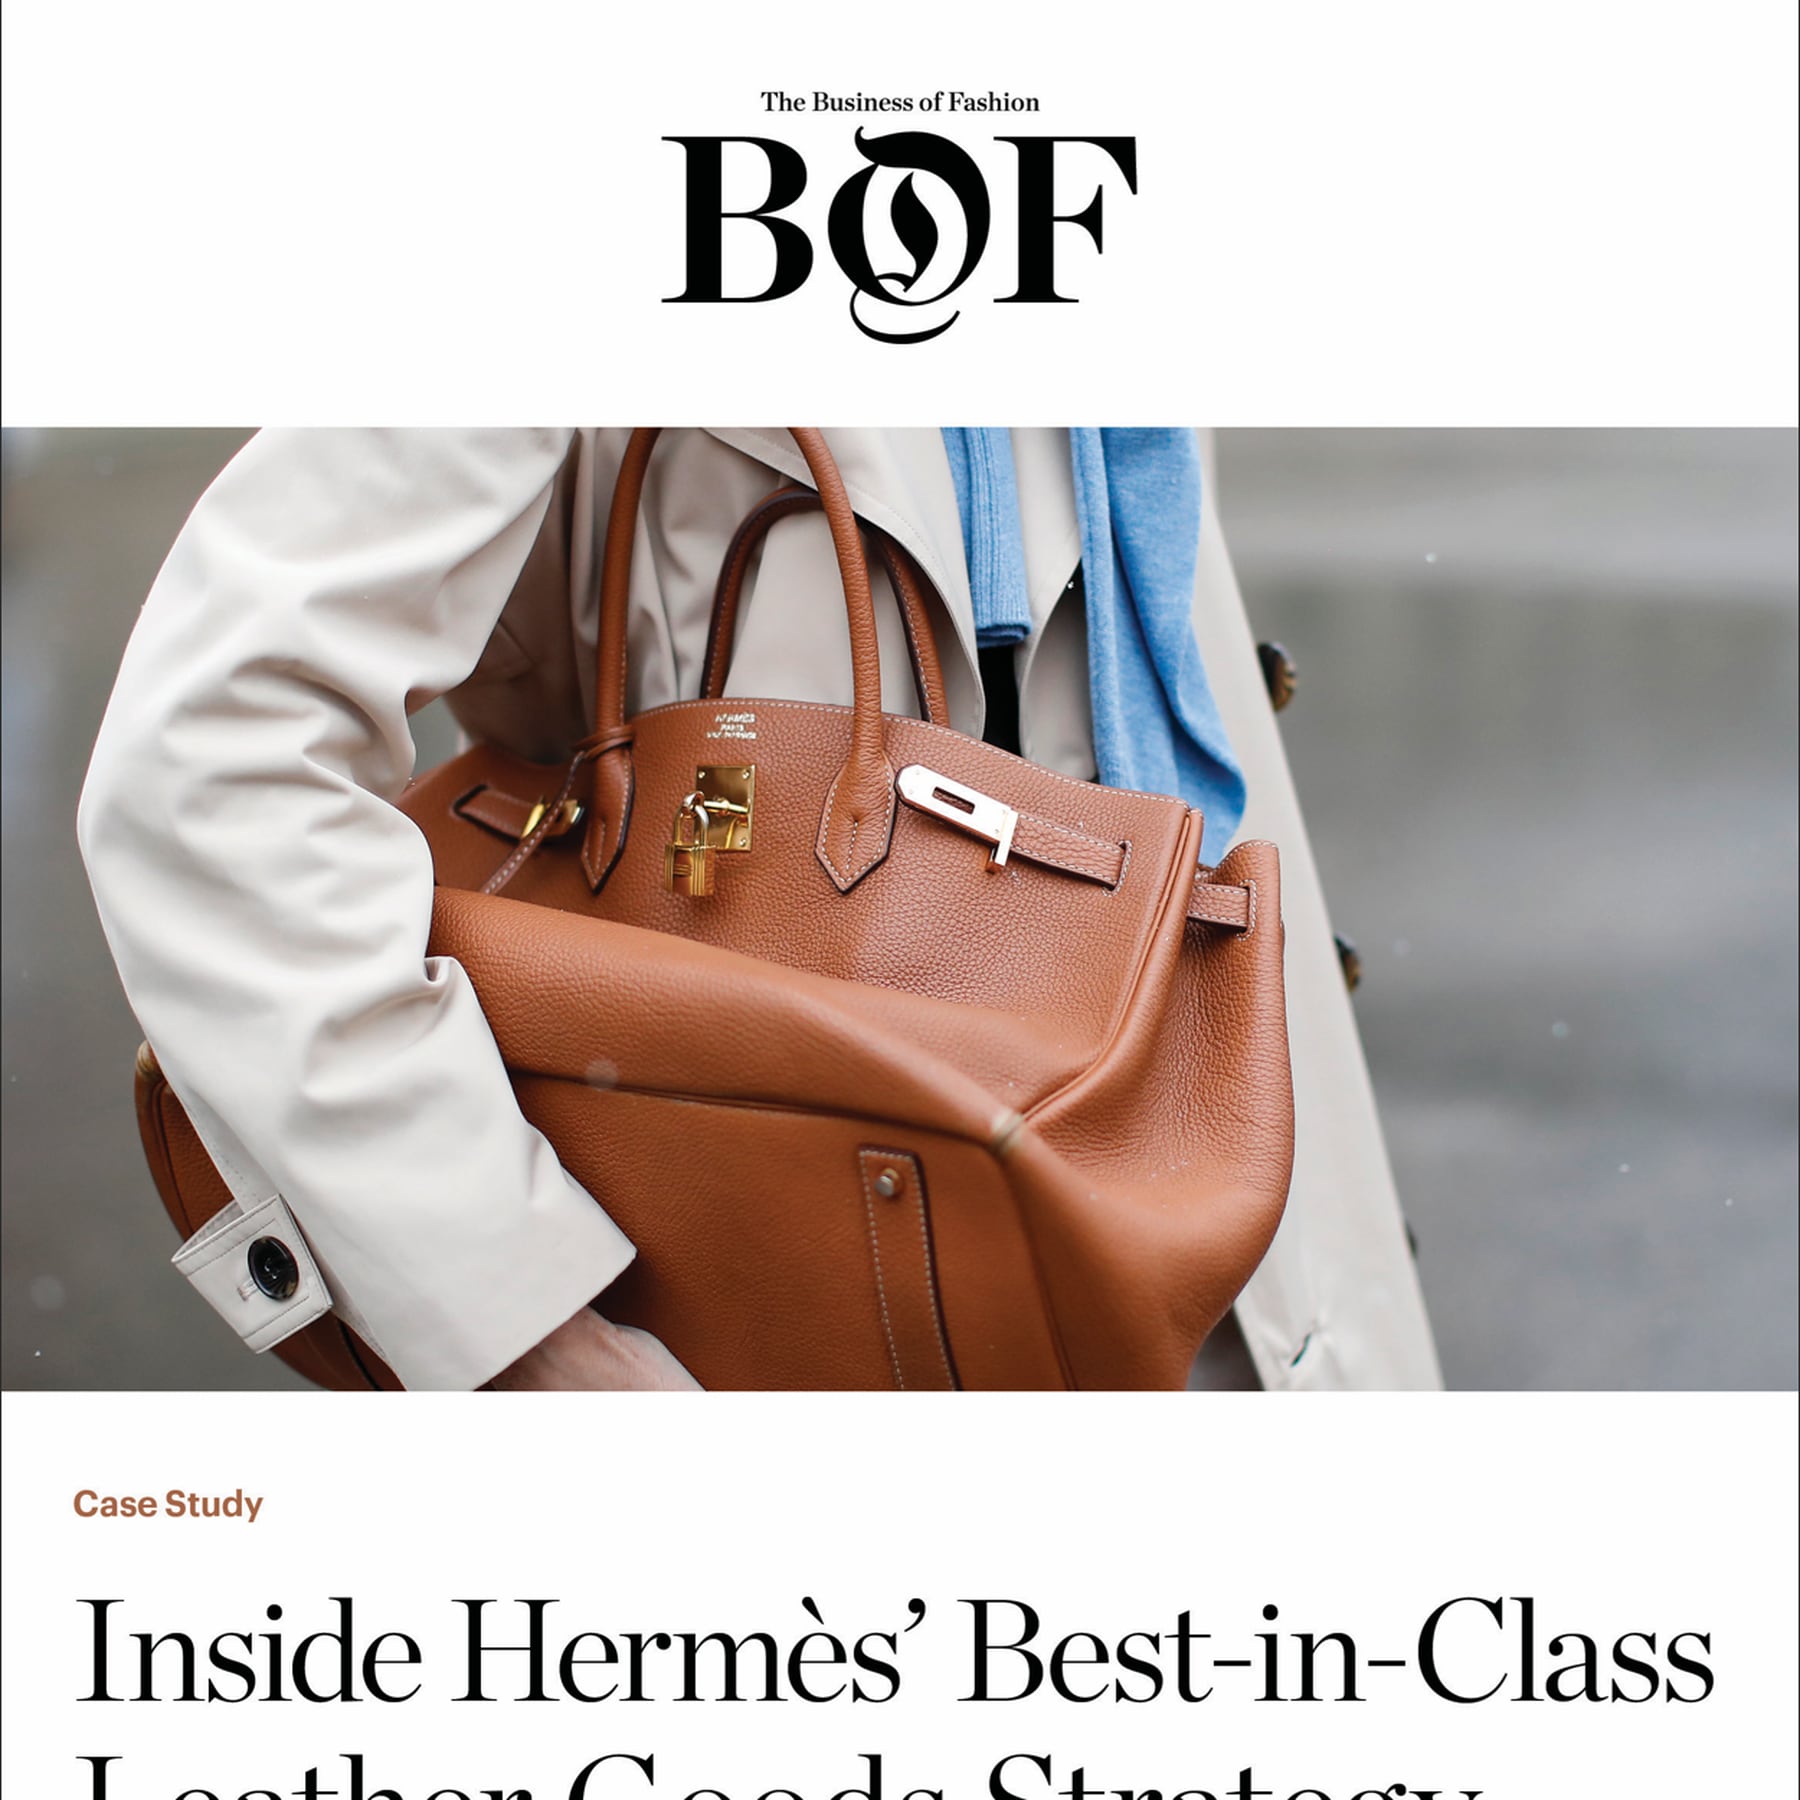 Case Study, Inside Hermès' Best-in-Class Leather Goods Strategy